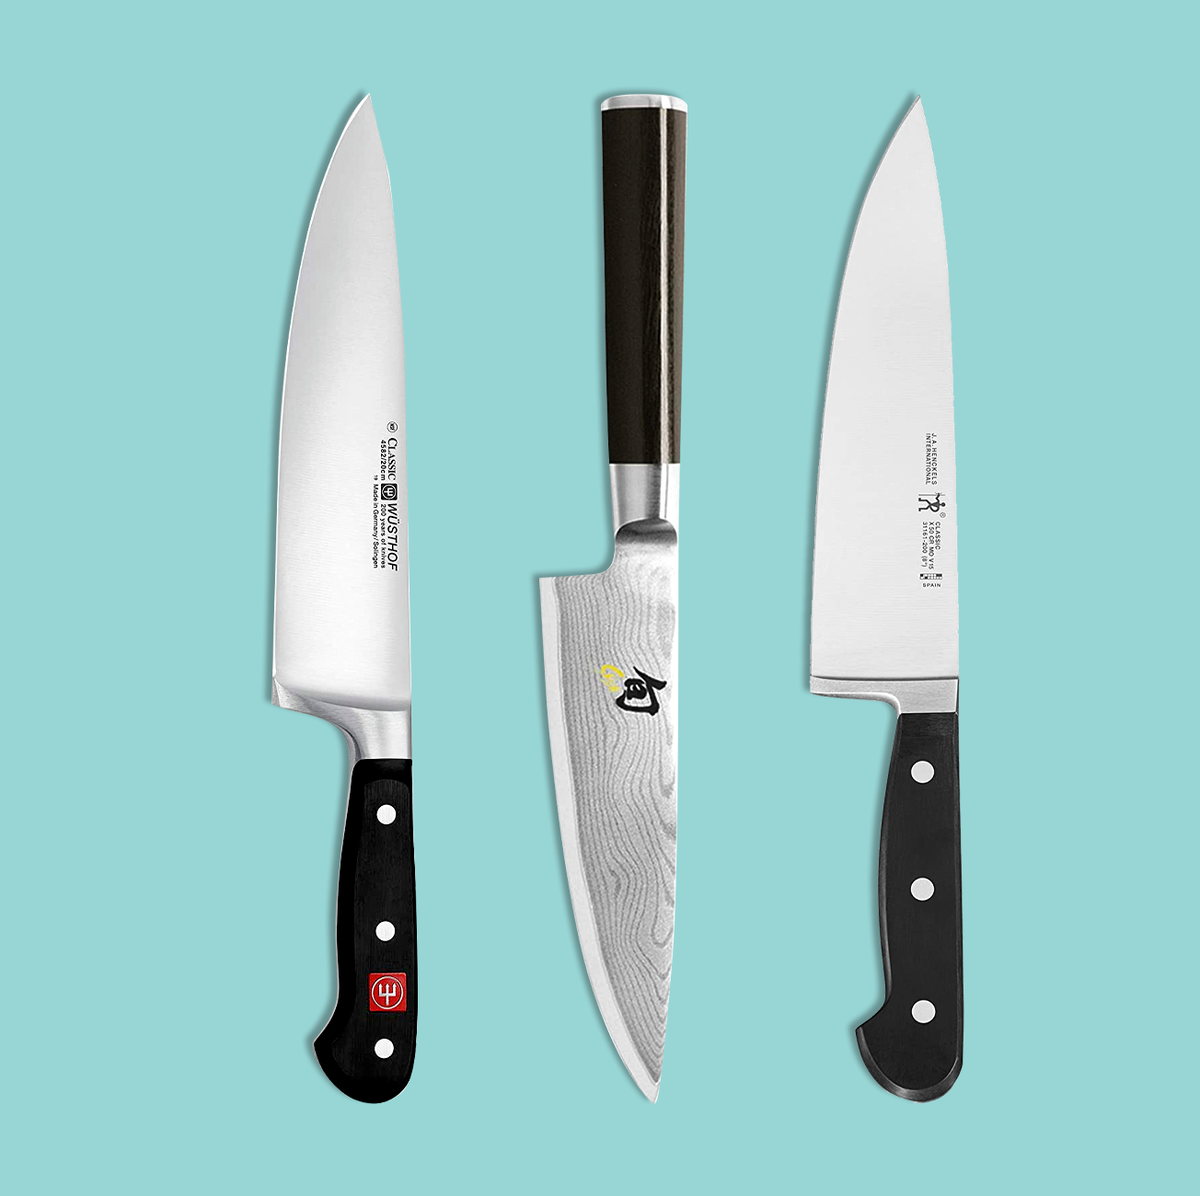 Aokeda 18 piece knife set